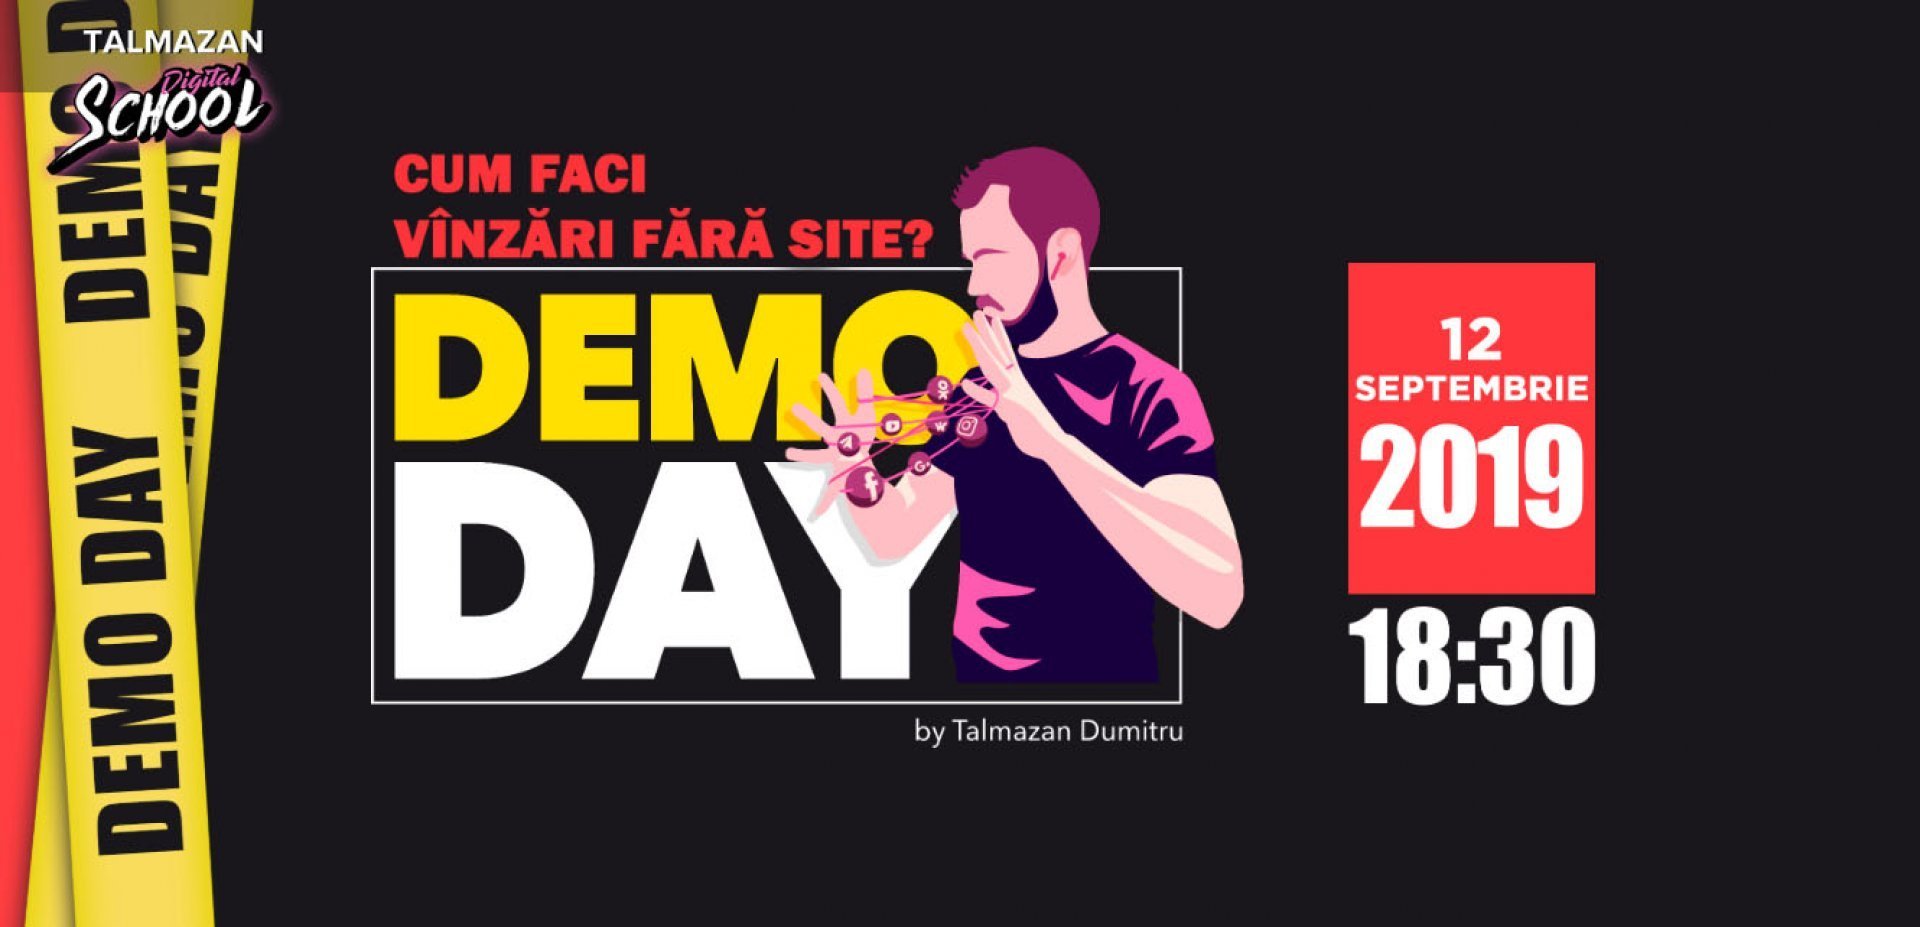 DemoDay - Cum faci vanzari fara site? Cu Dumitru Talmazan